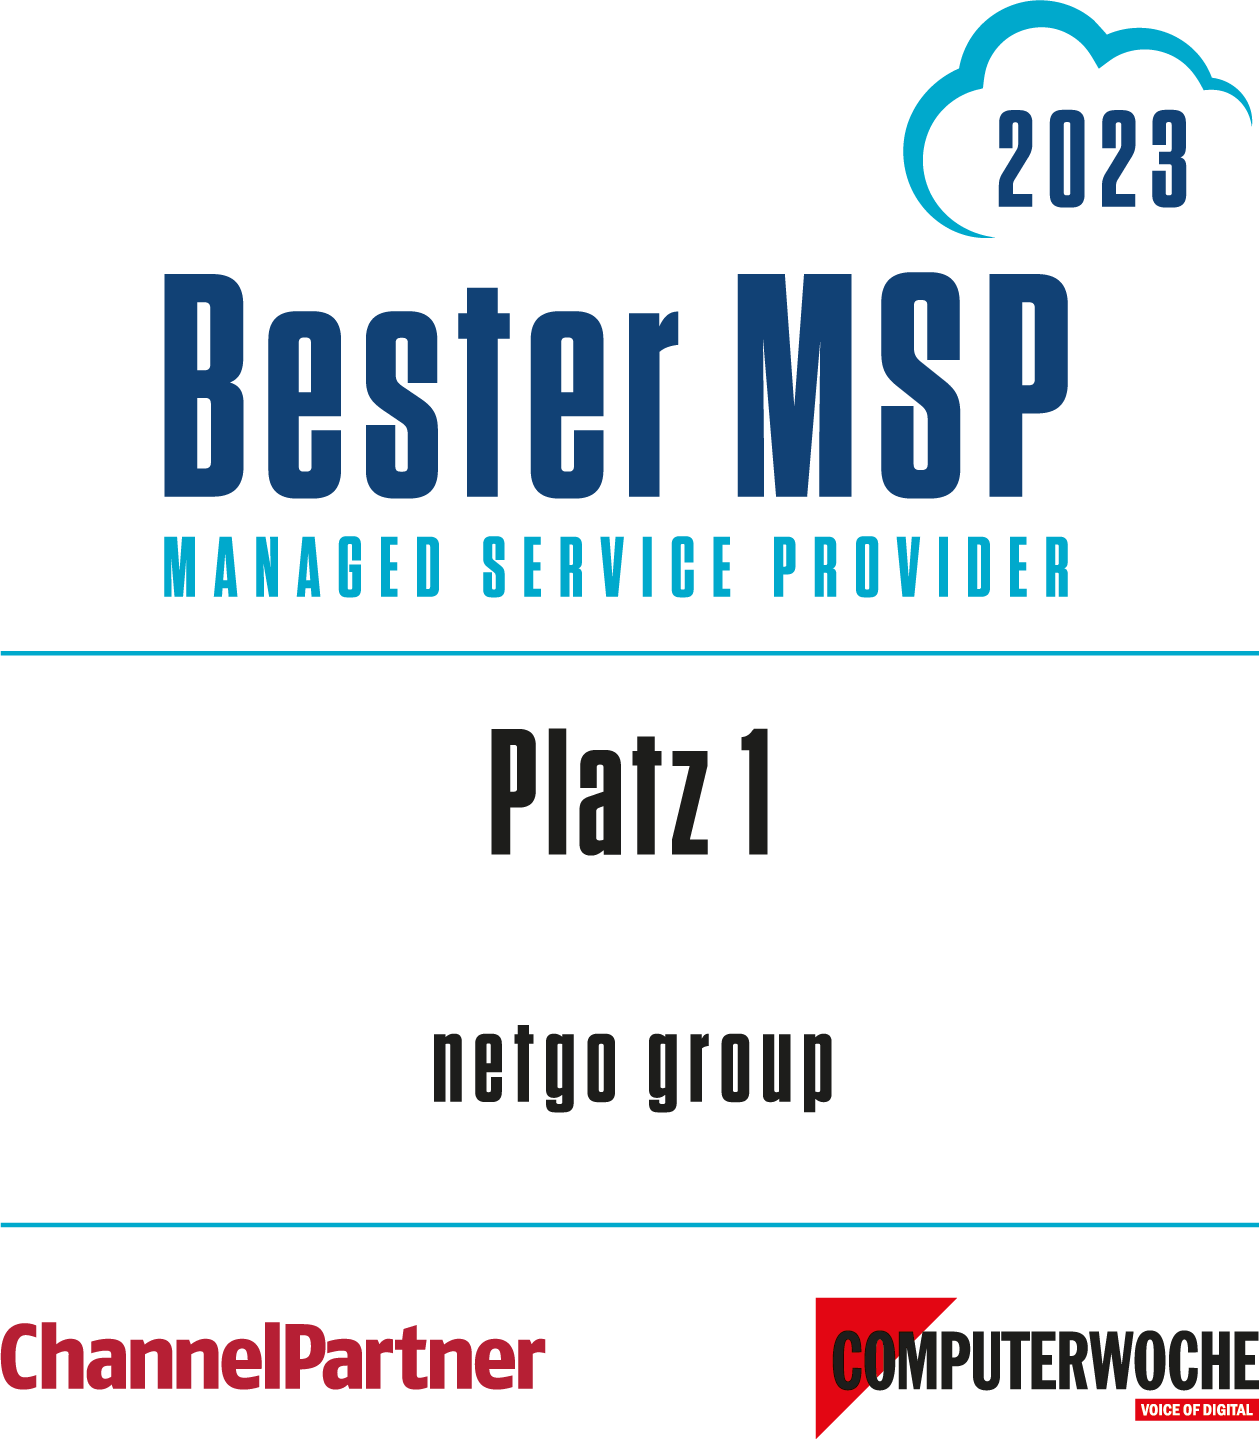 bester-msp-managed-service-provider-2023